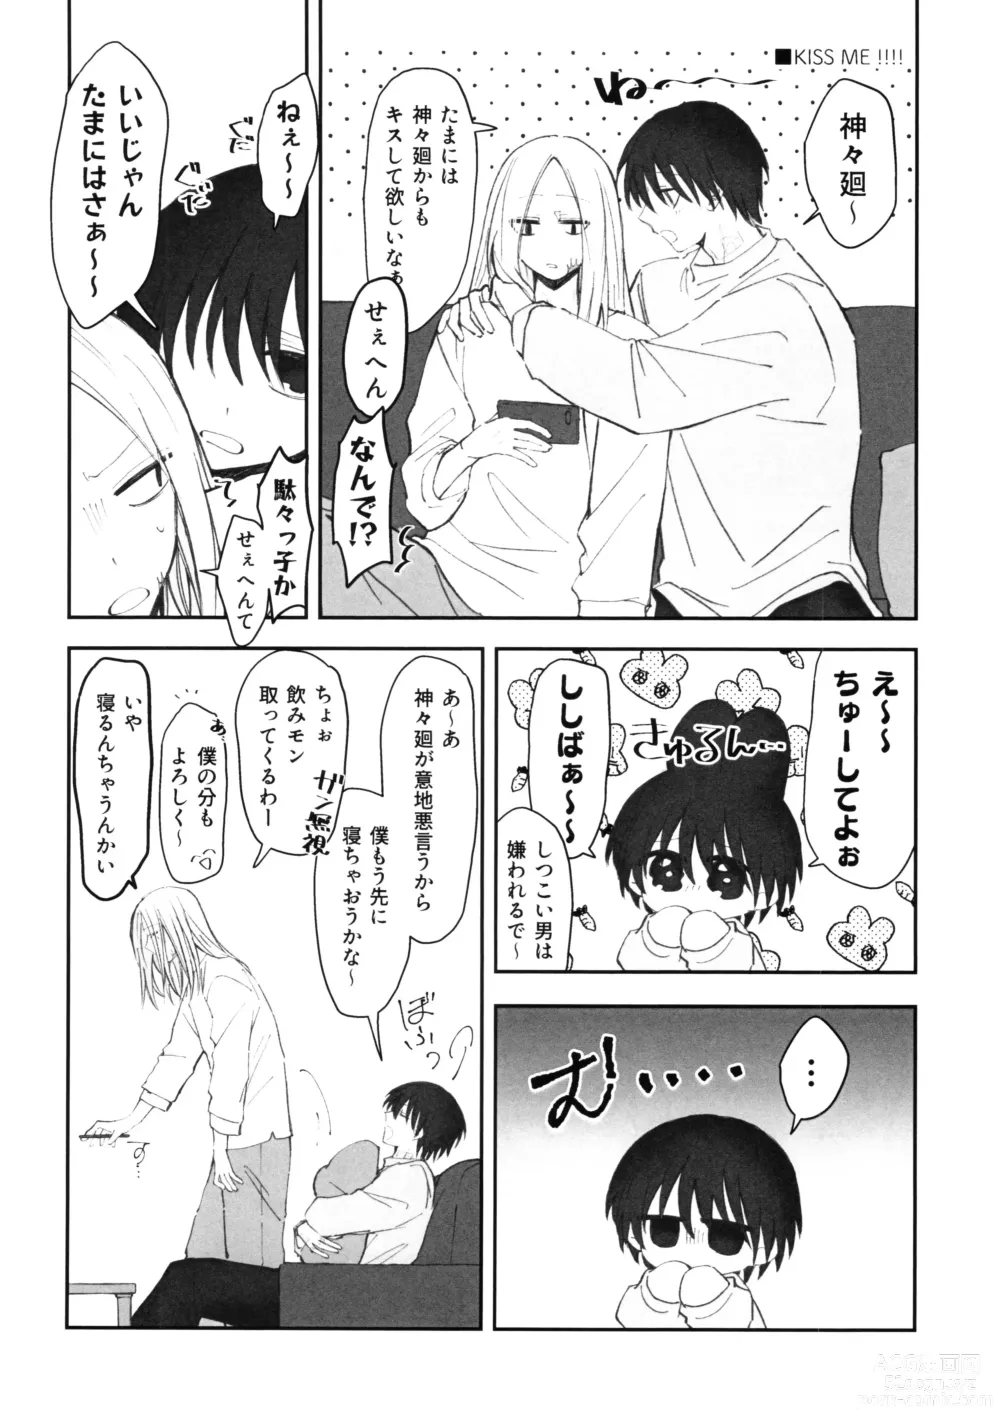 Page 7 of doujinshi NGSS LOG 1